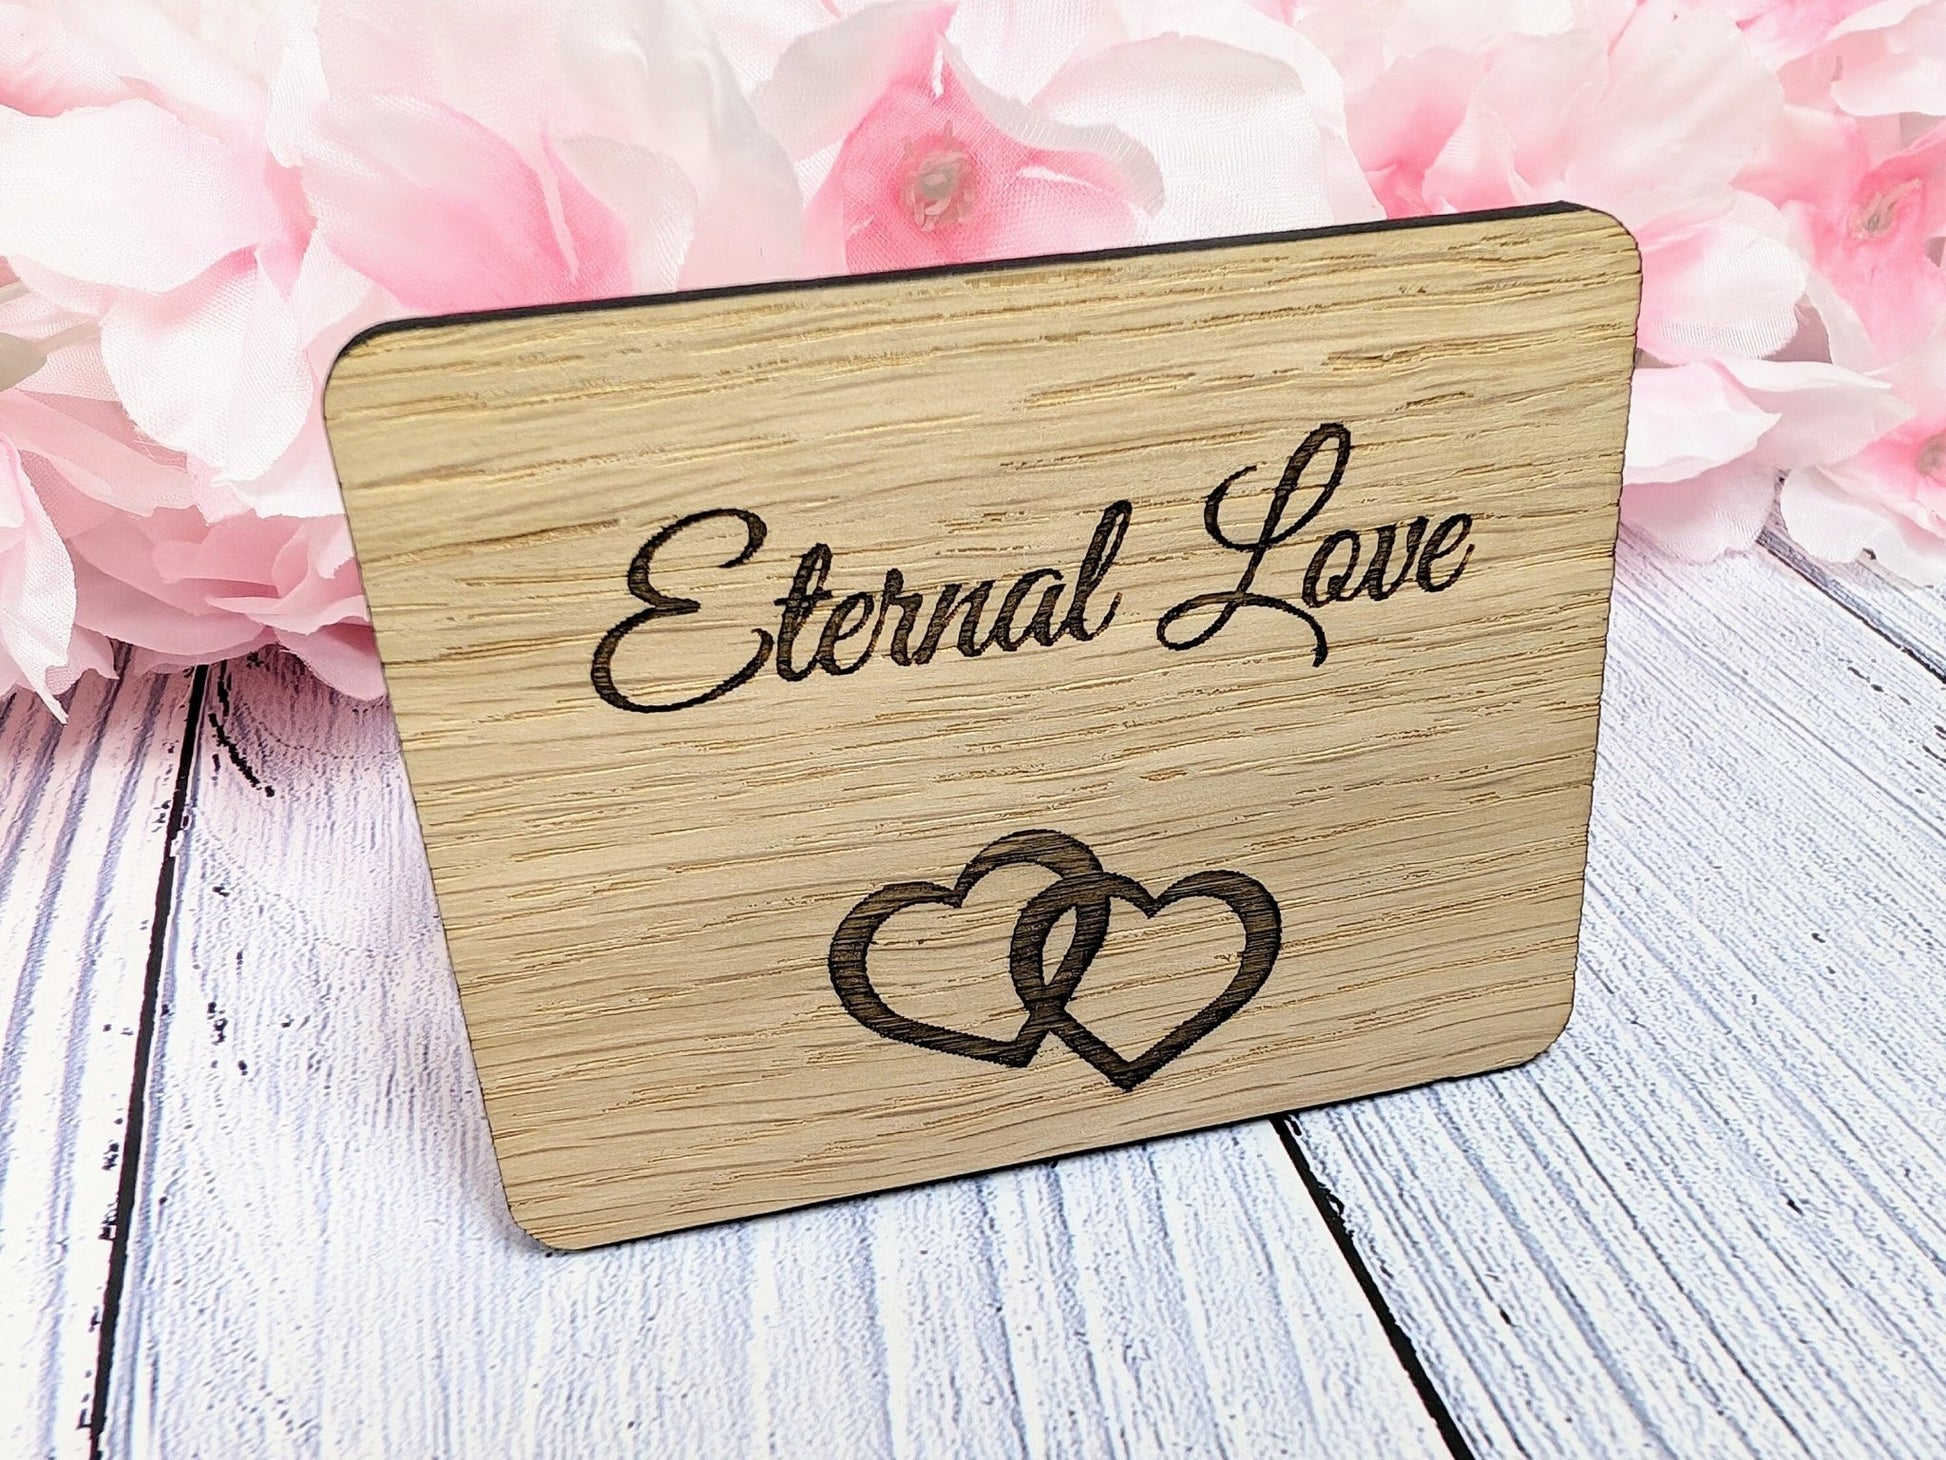 Eternal Love - Wooden Fridge Magnet with Interlocking Hearts - Romantic Gift - CherryGroveCraft